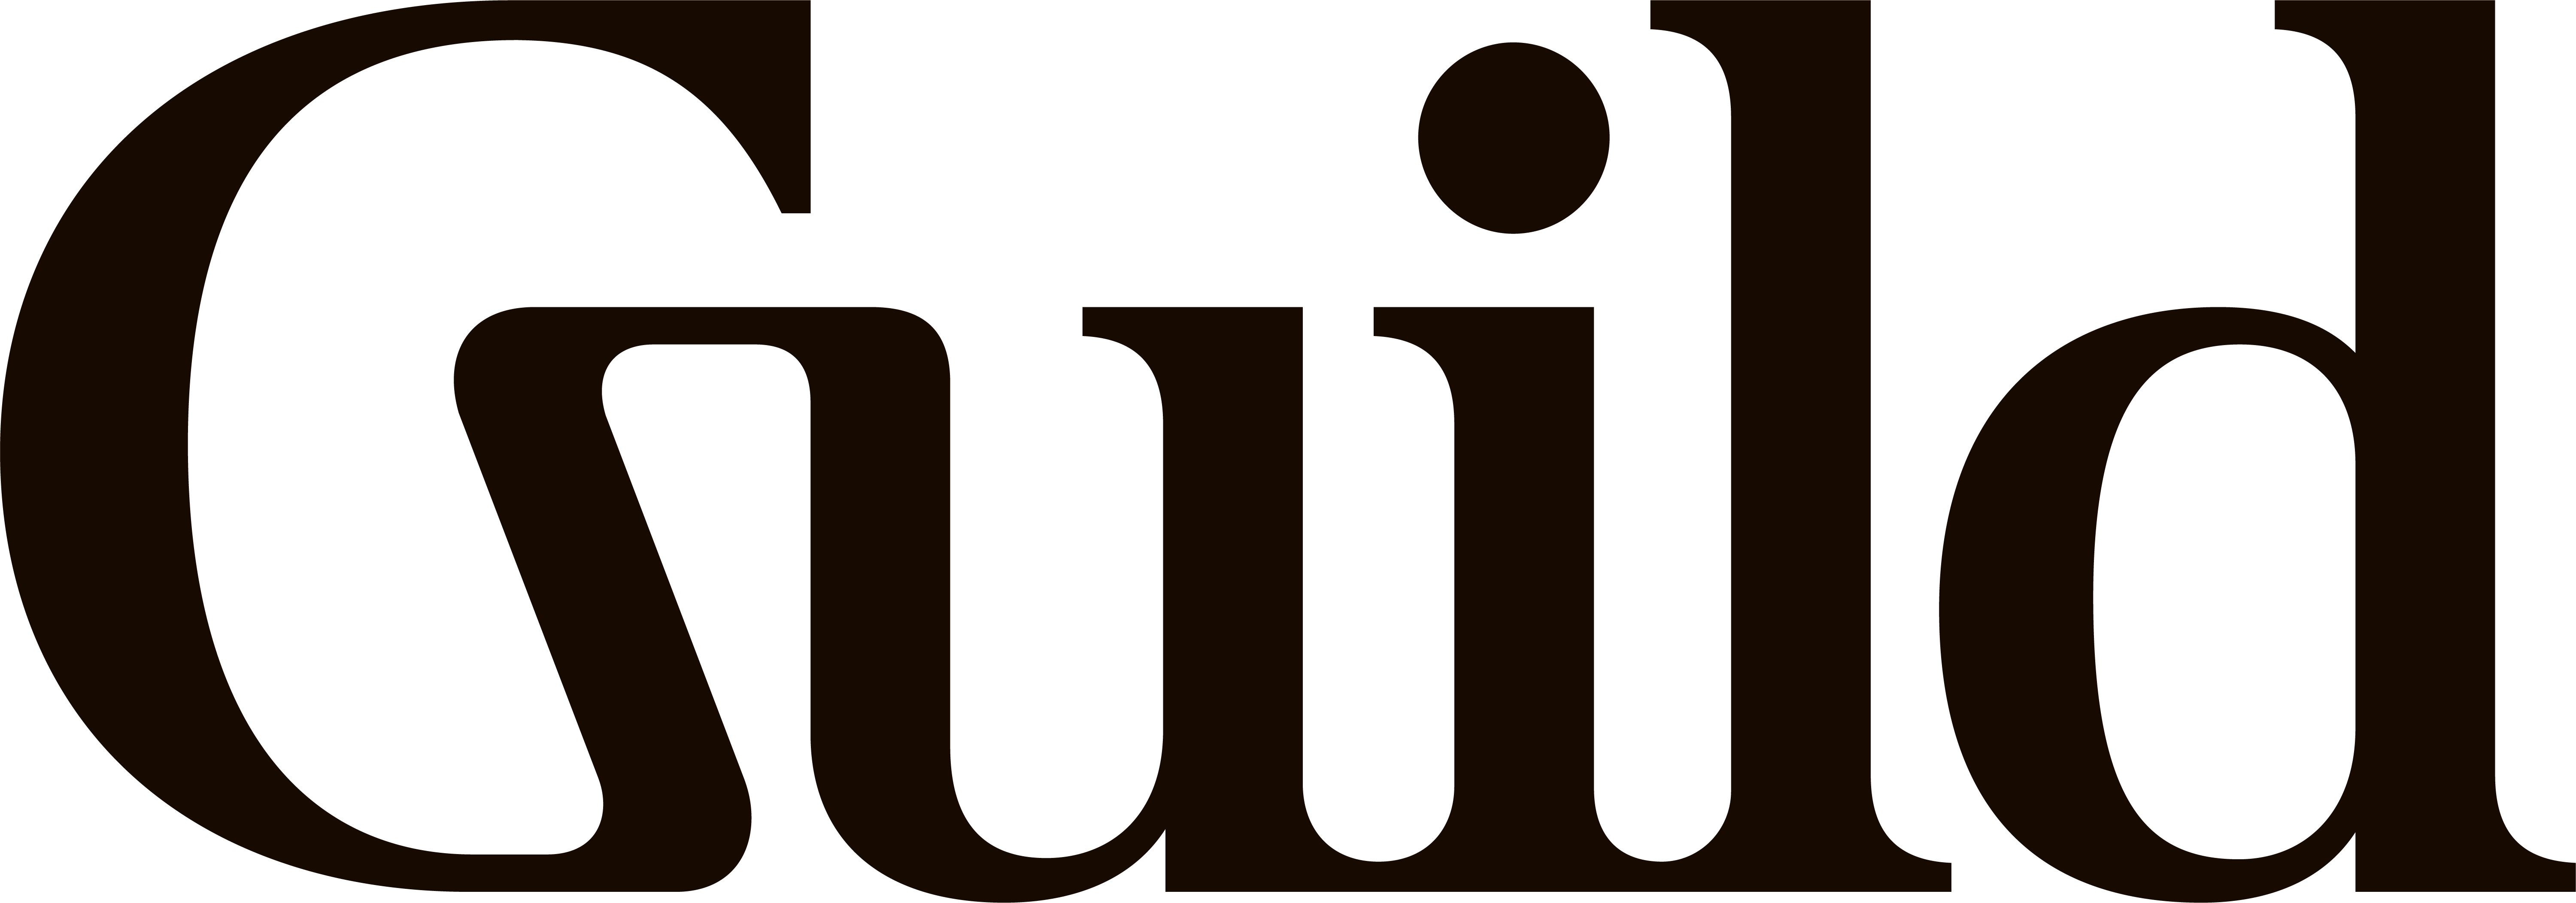 Guild_Logo_Charcoal